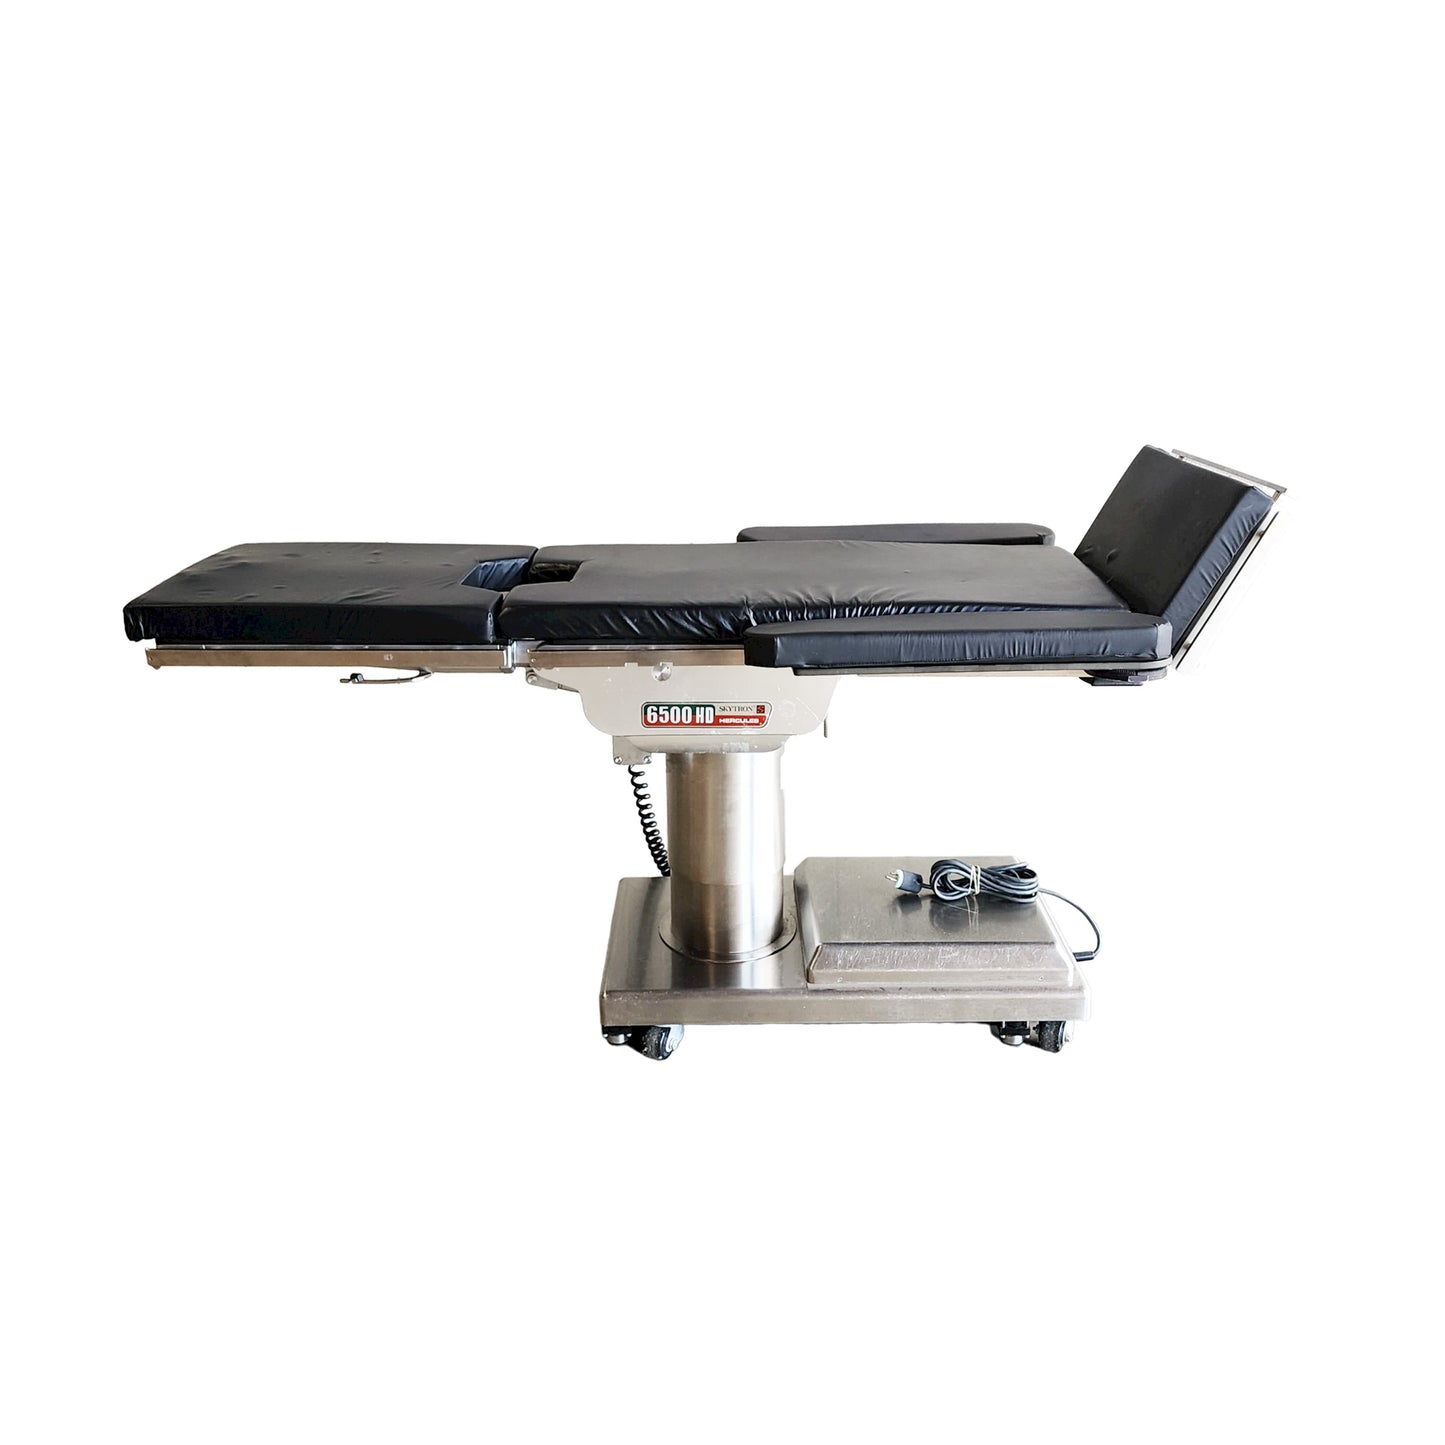 Skytron Hercules 6500HD Surgical Table